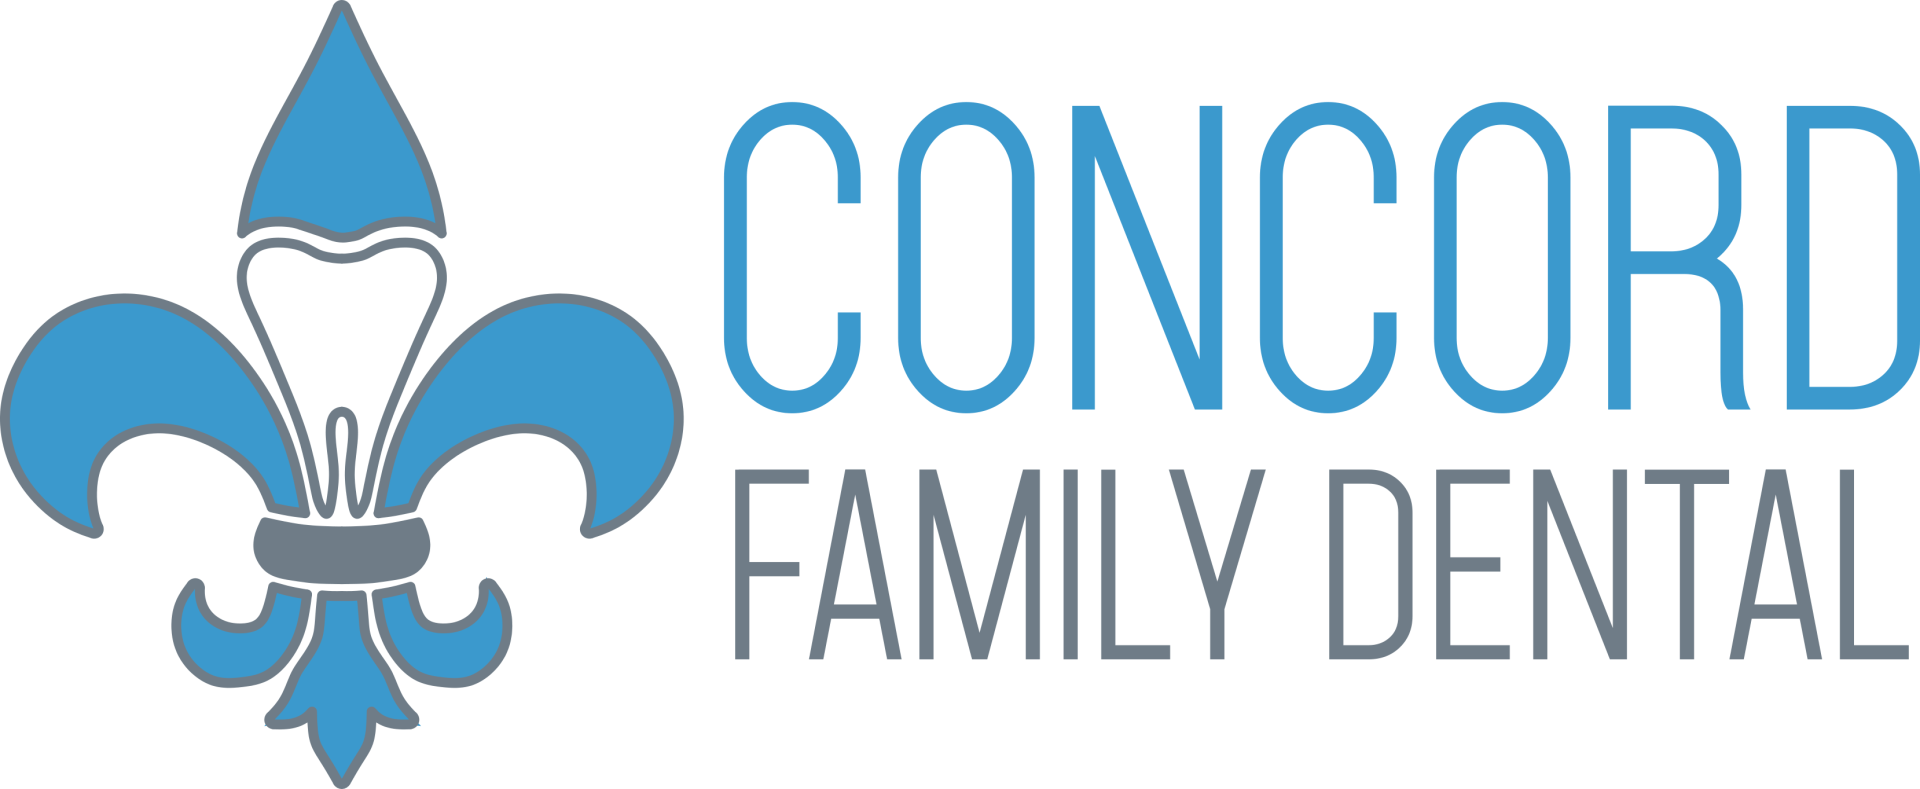 Concord Family Dental Logo | Top Affordable dentist for dentures, implants, crowns